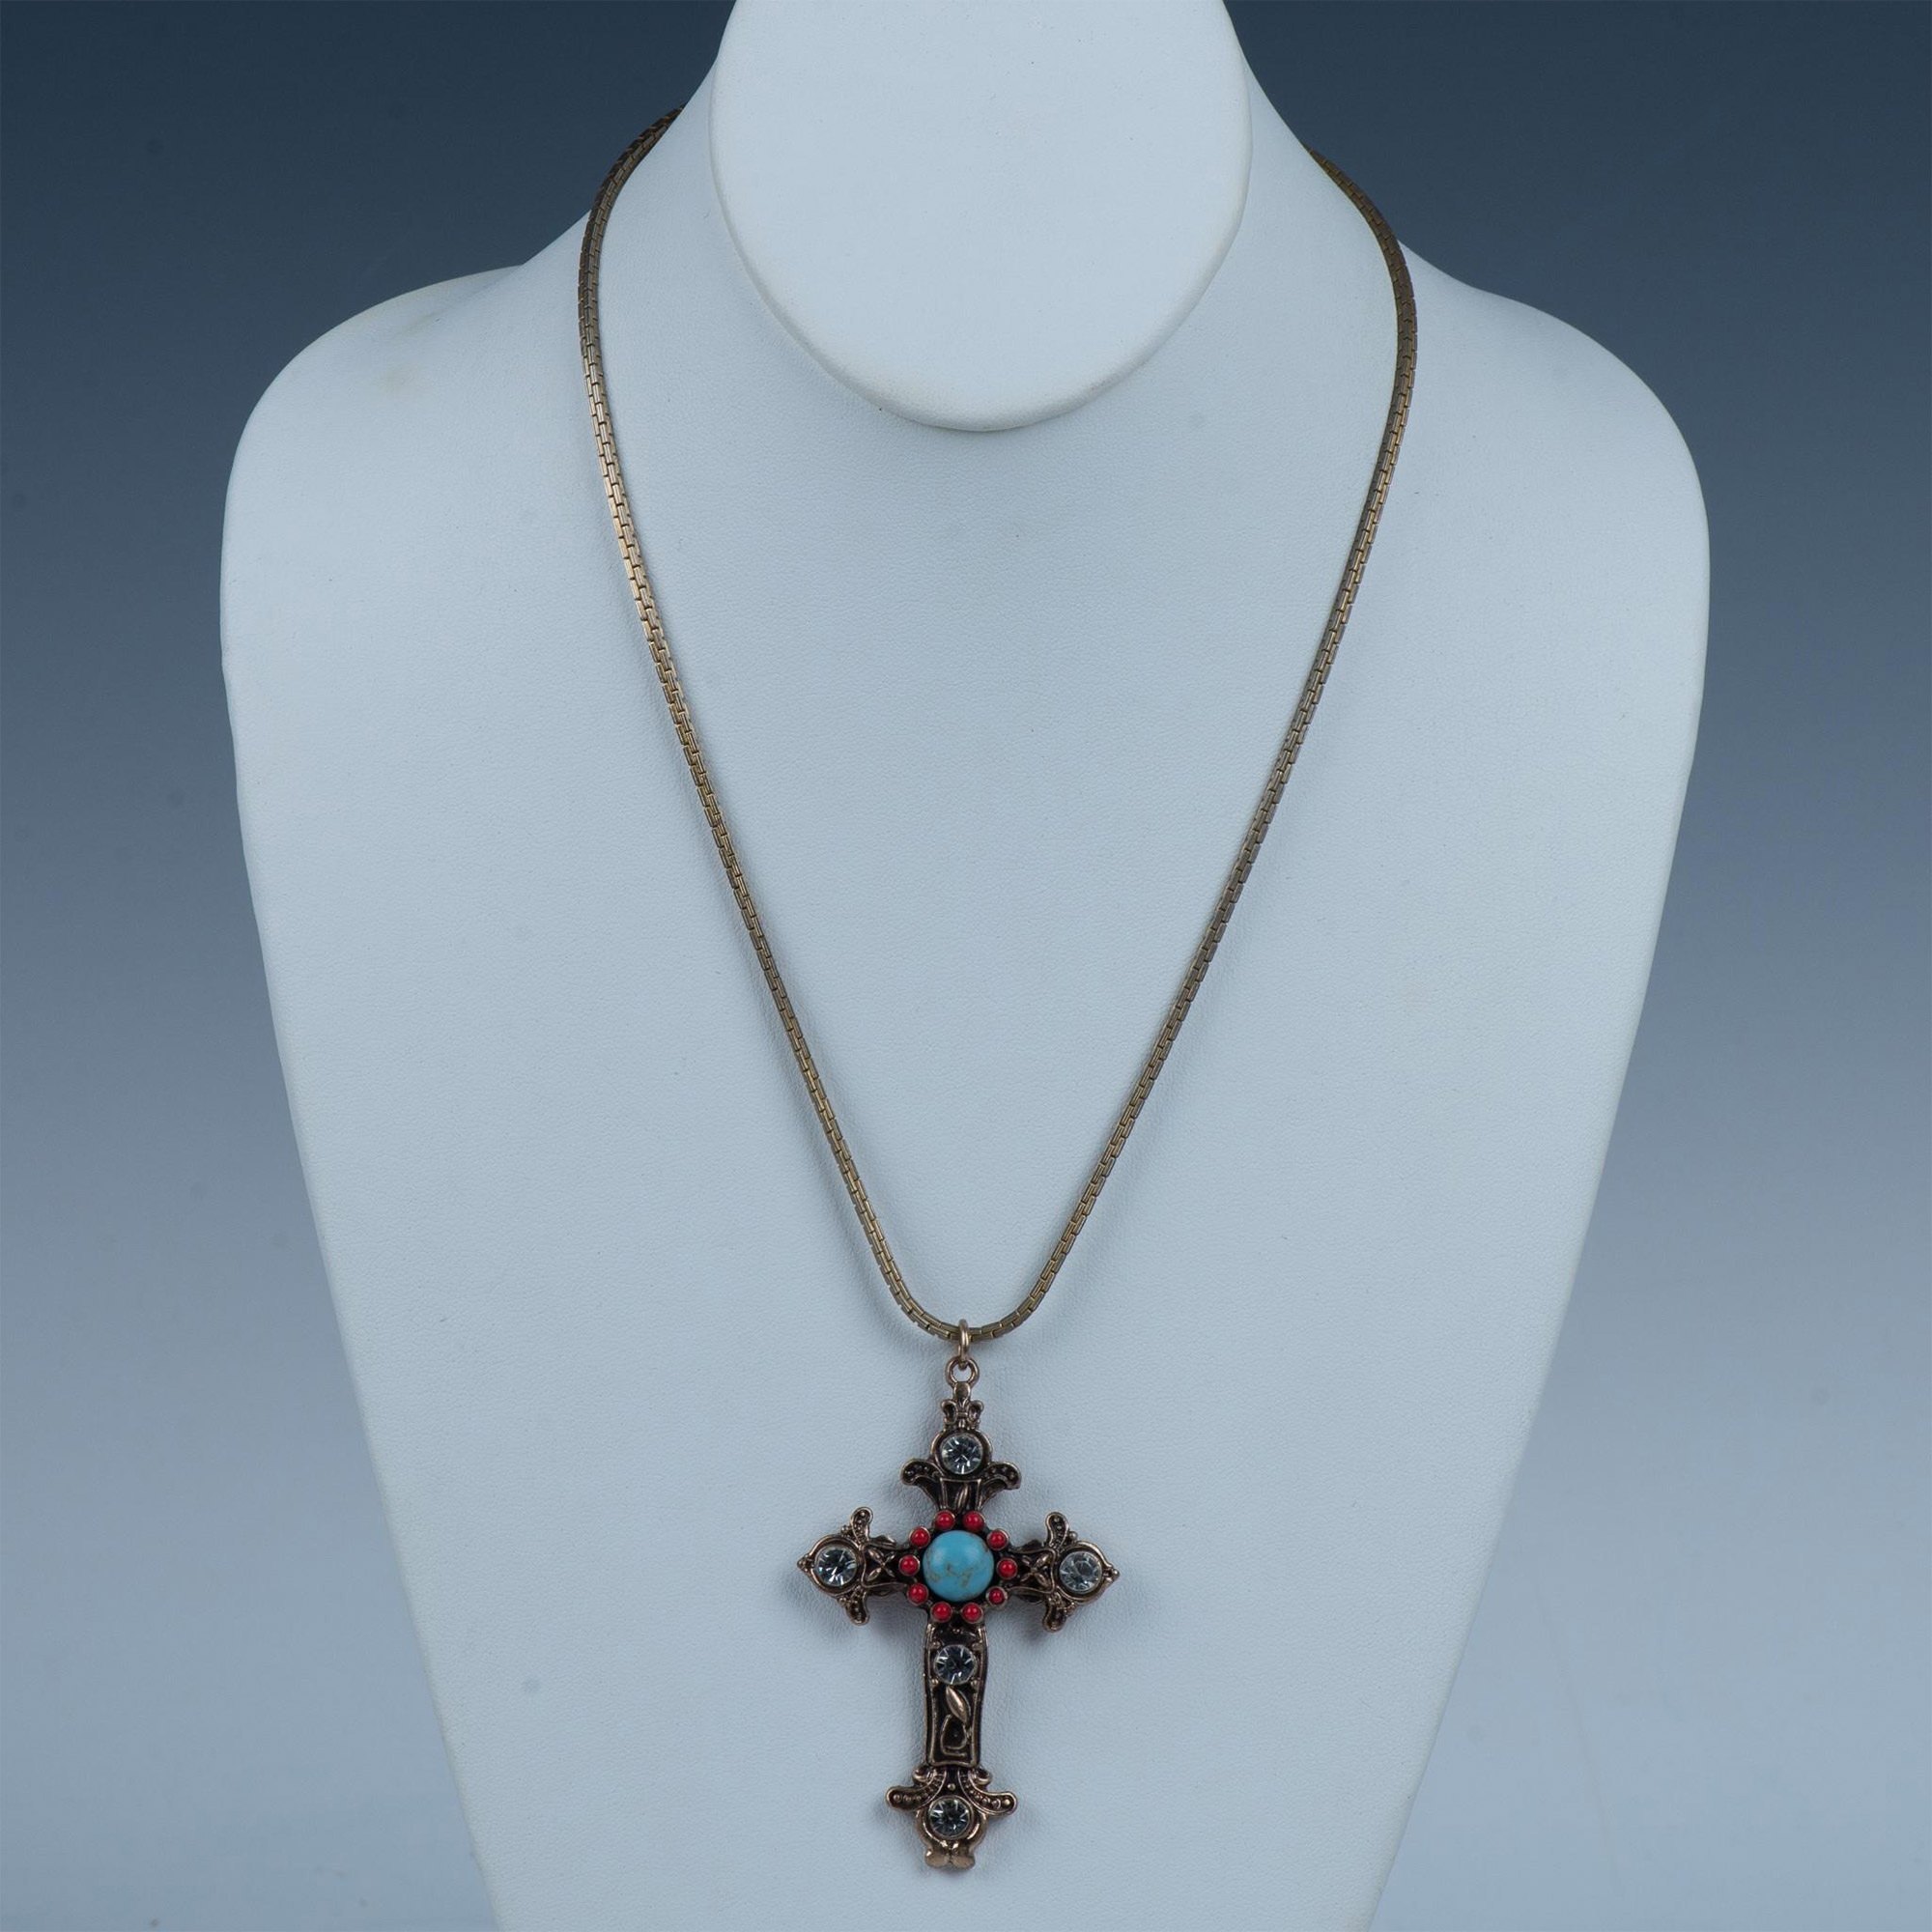 Art Nouveau Embellished Cross Pendant Necklace - Image 2 of 4